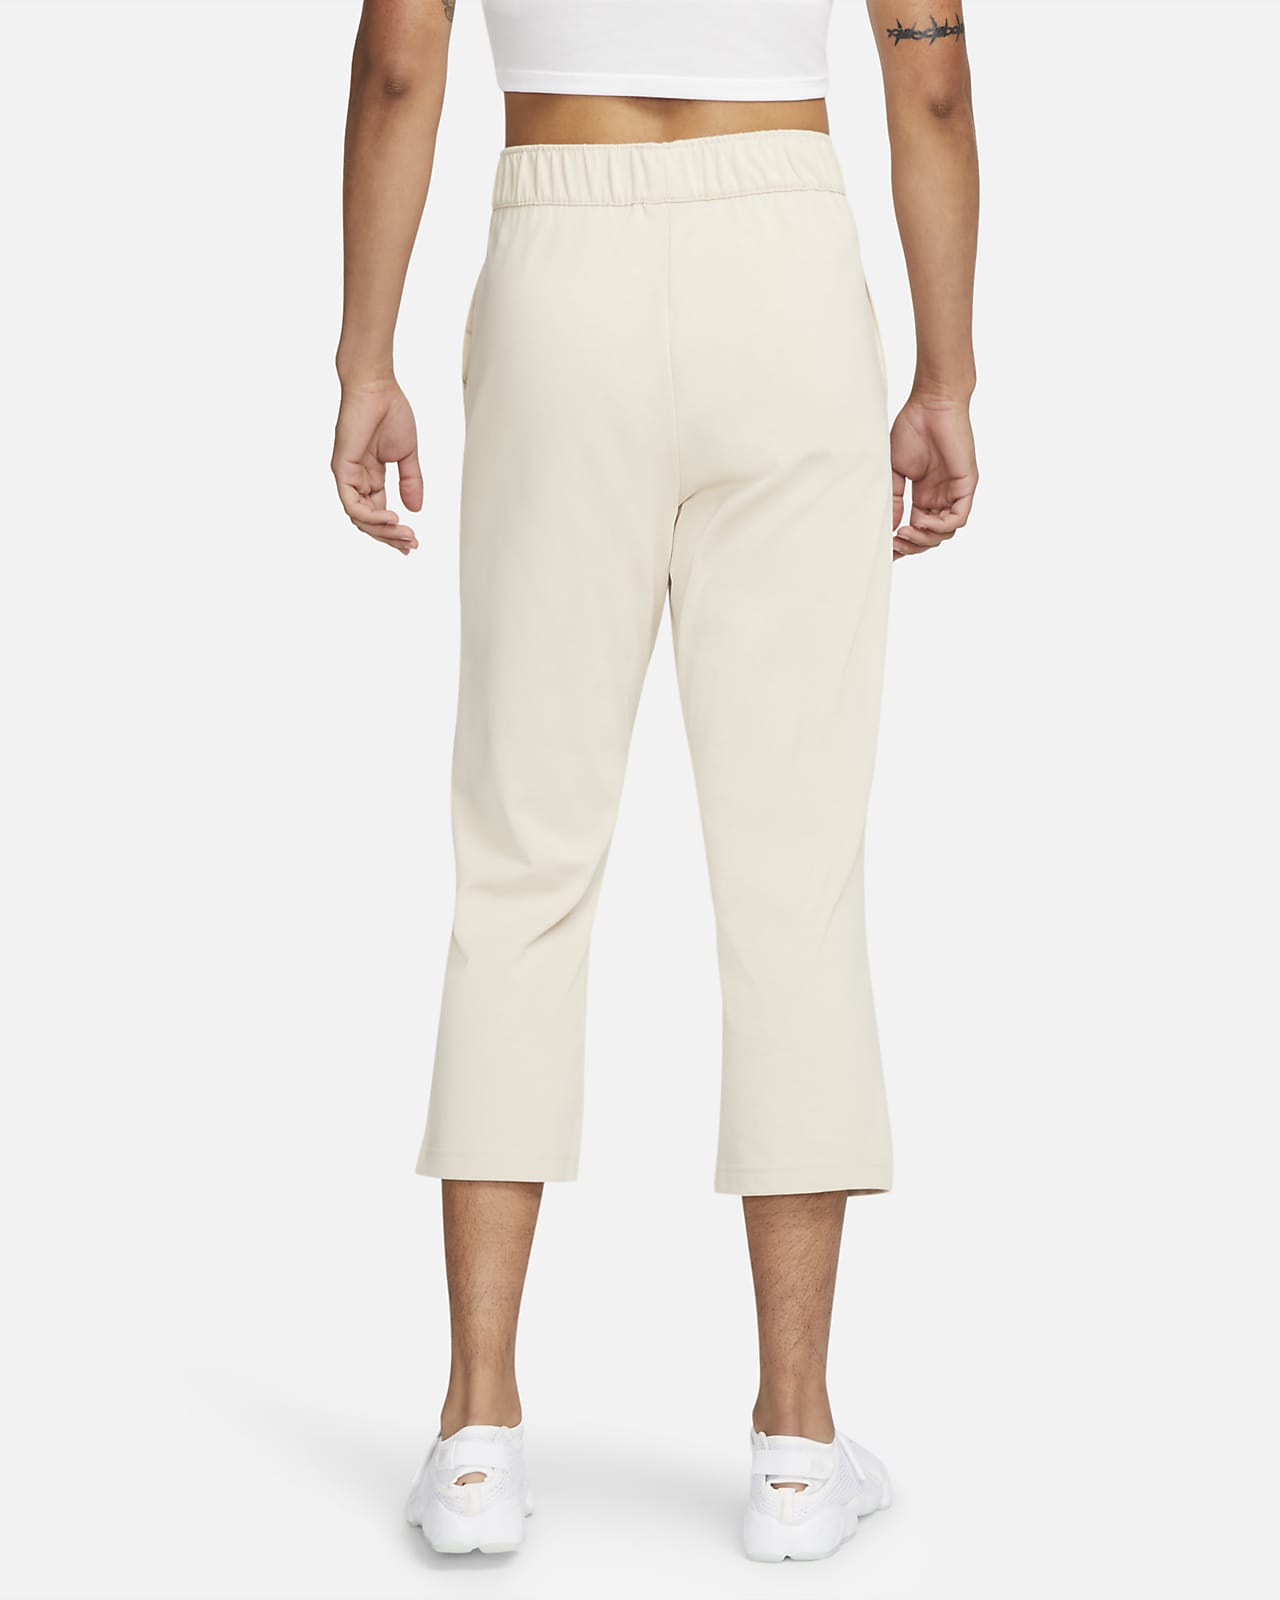 Ladies Nike Double-Zip Khaki Capri Pants- Size 8/10 – Refa's